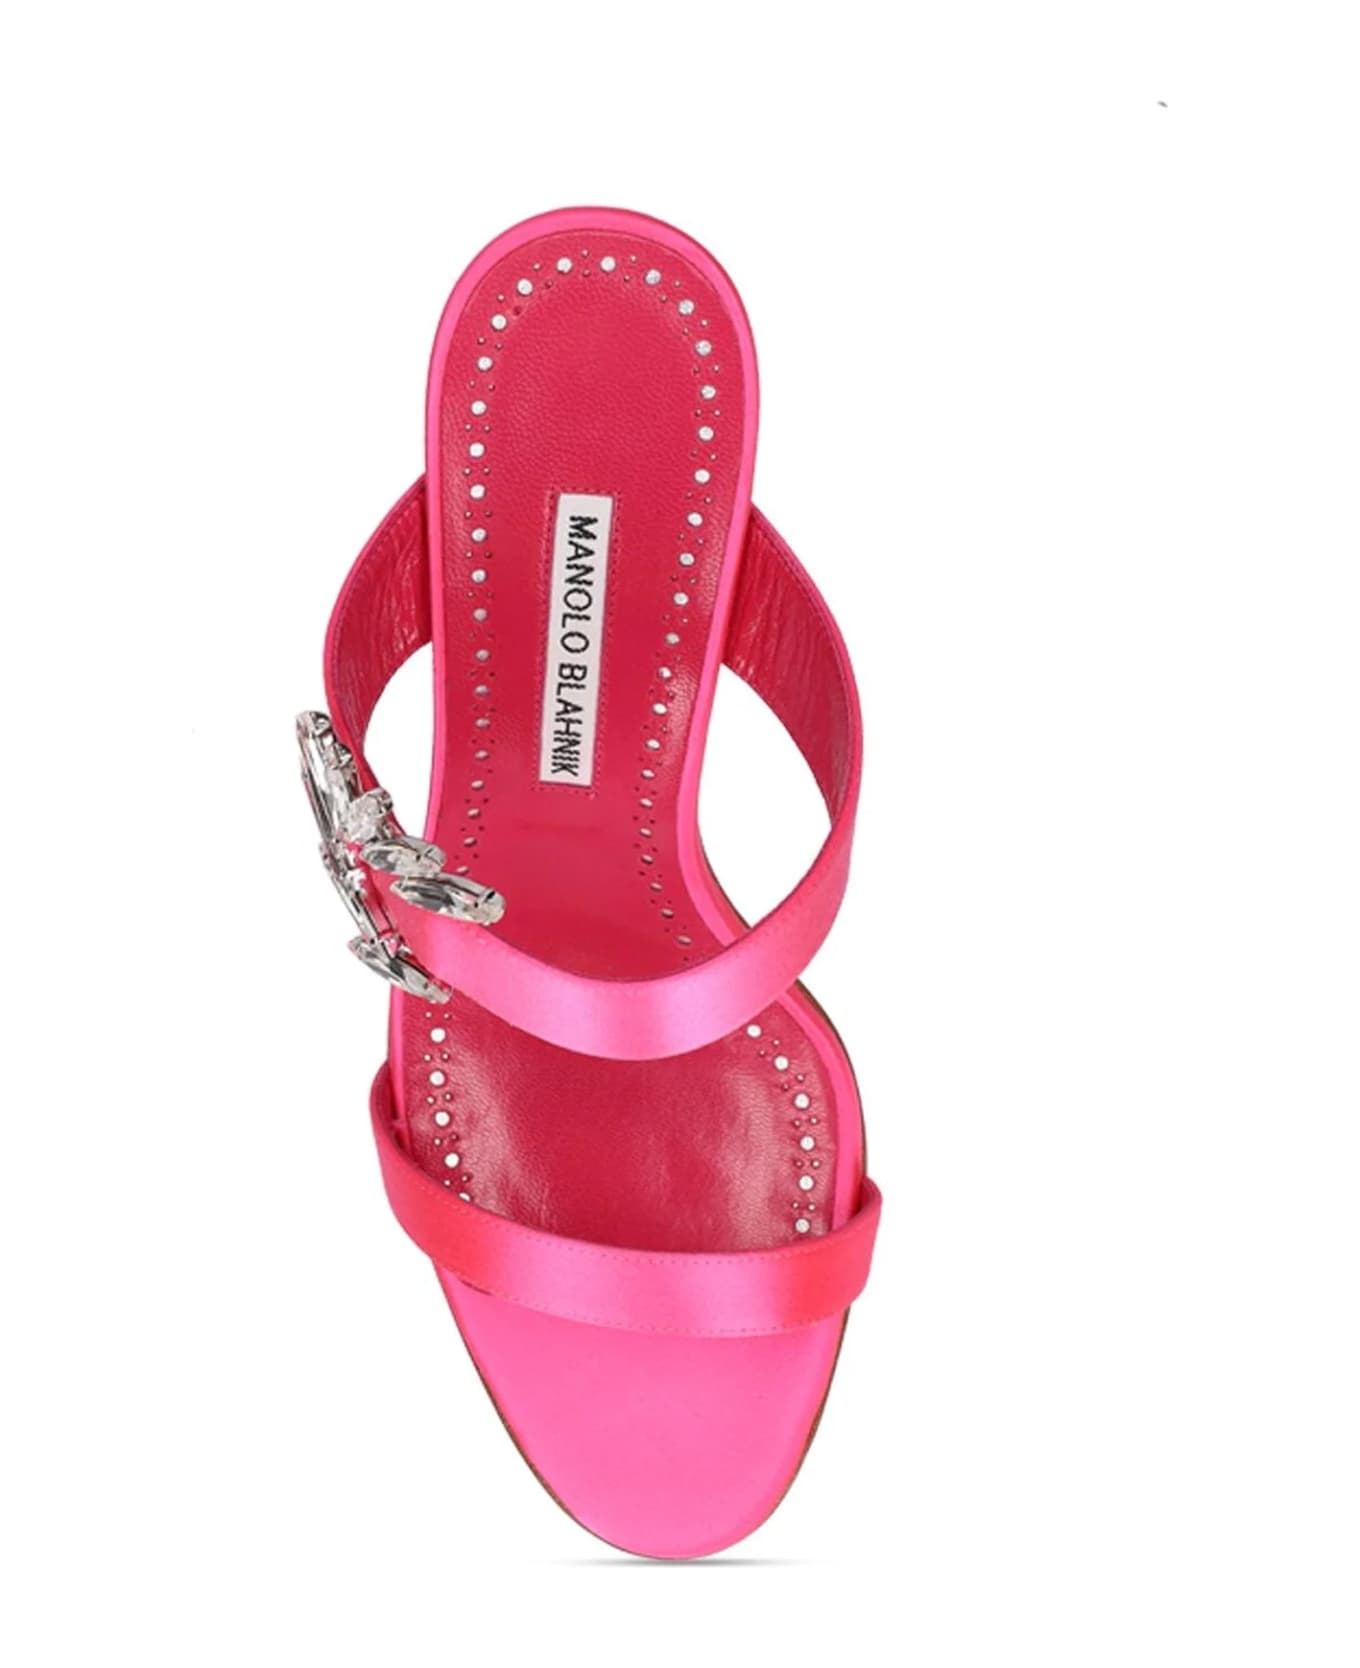 Manolo Blahnik Chivela Satin Heel Sandals - Pink